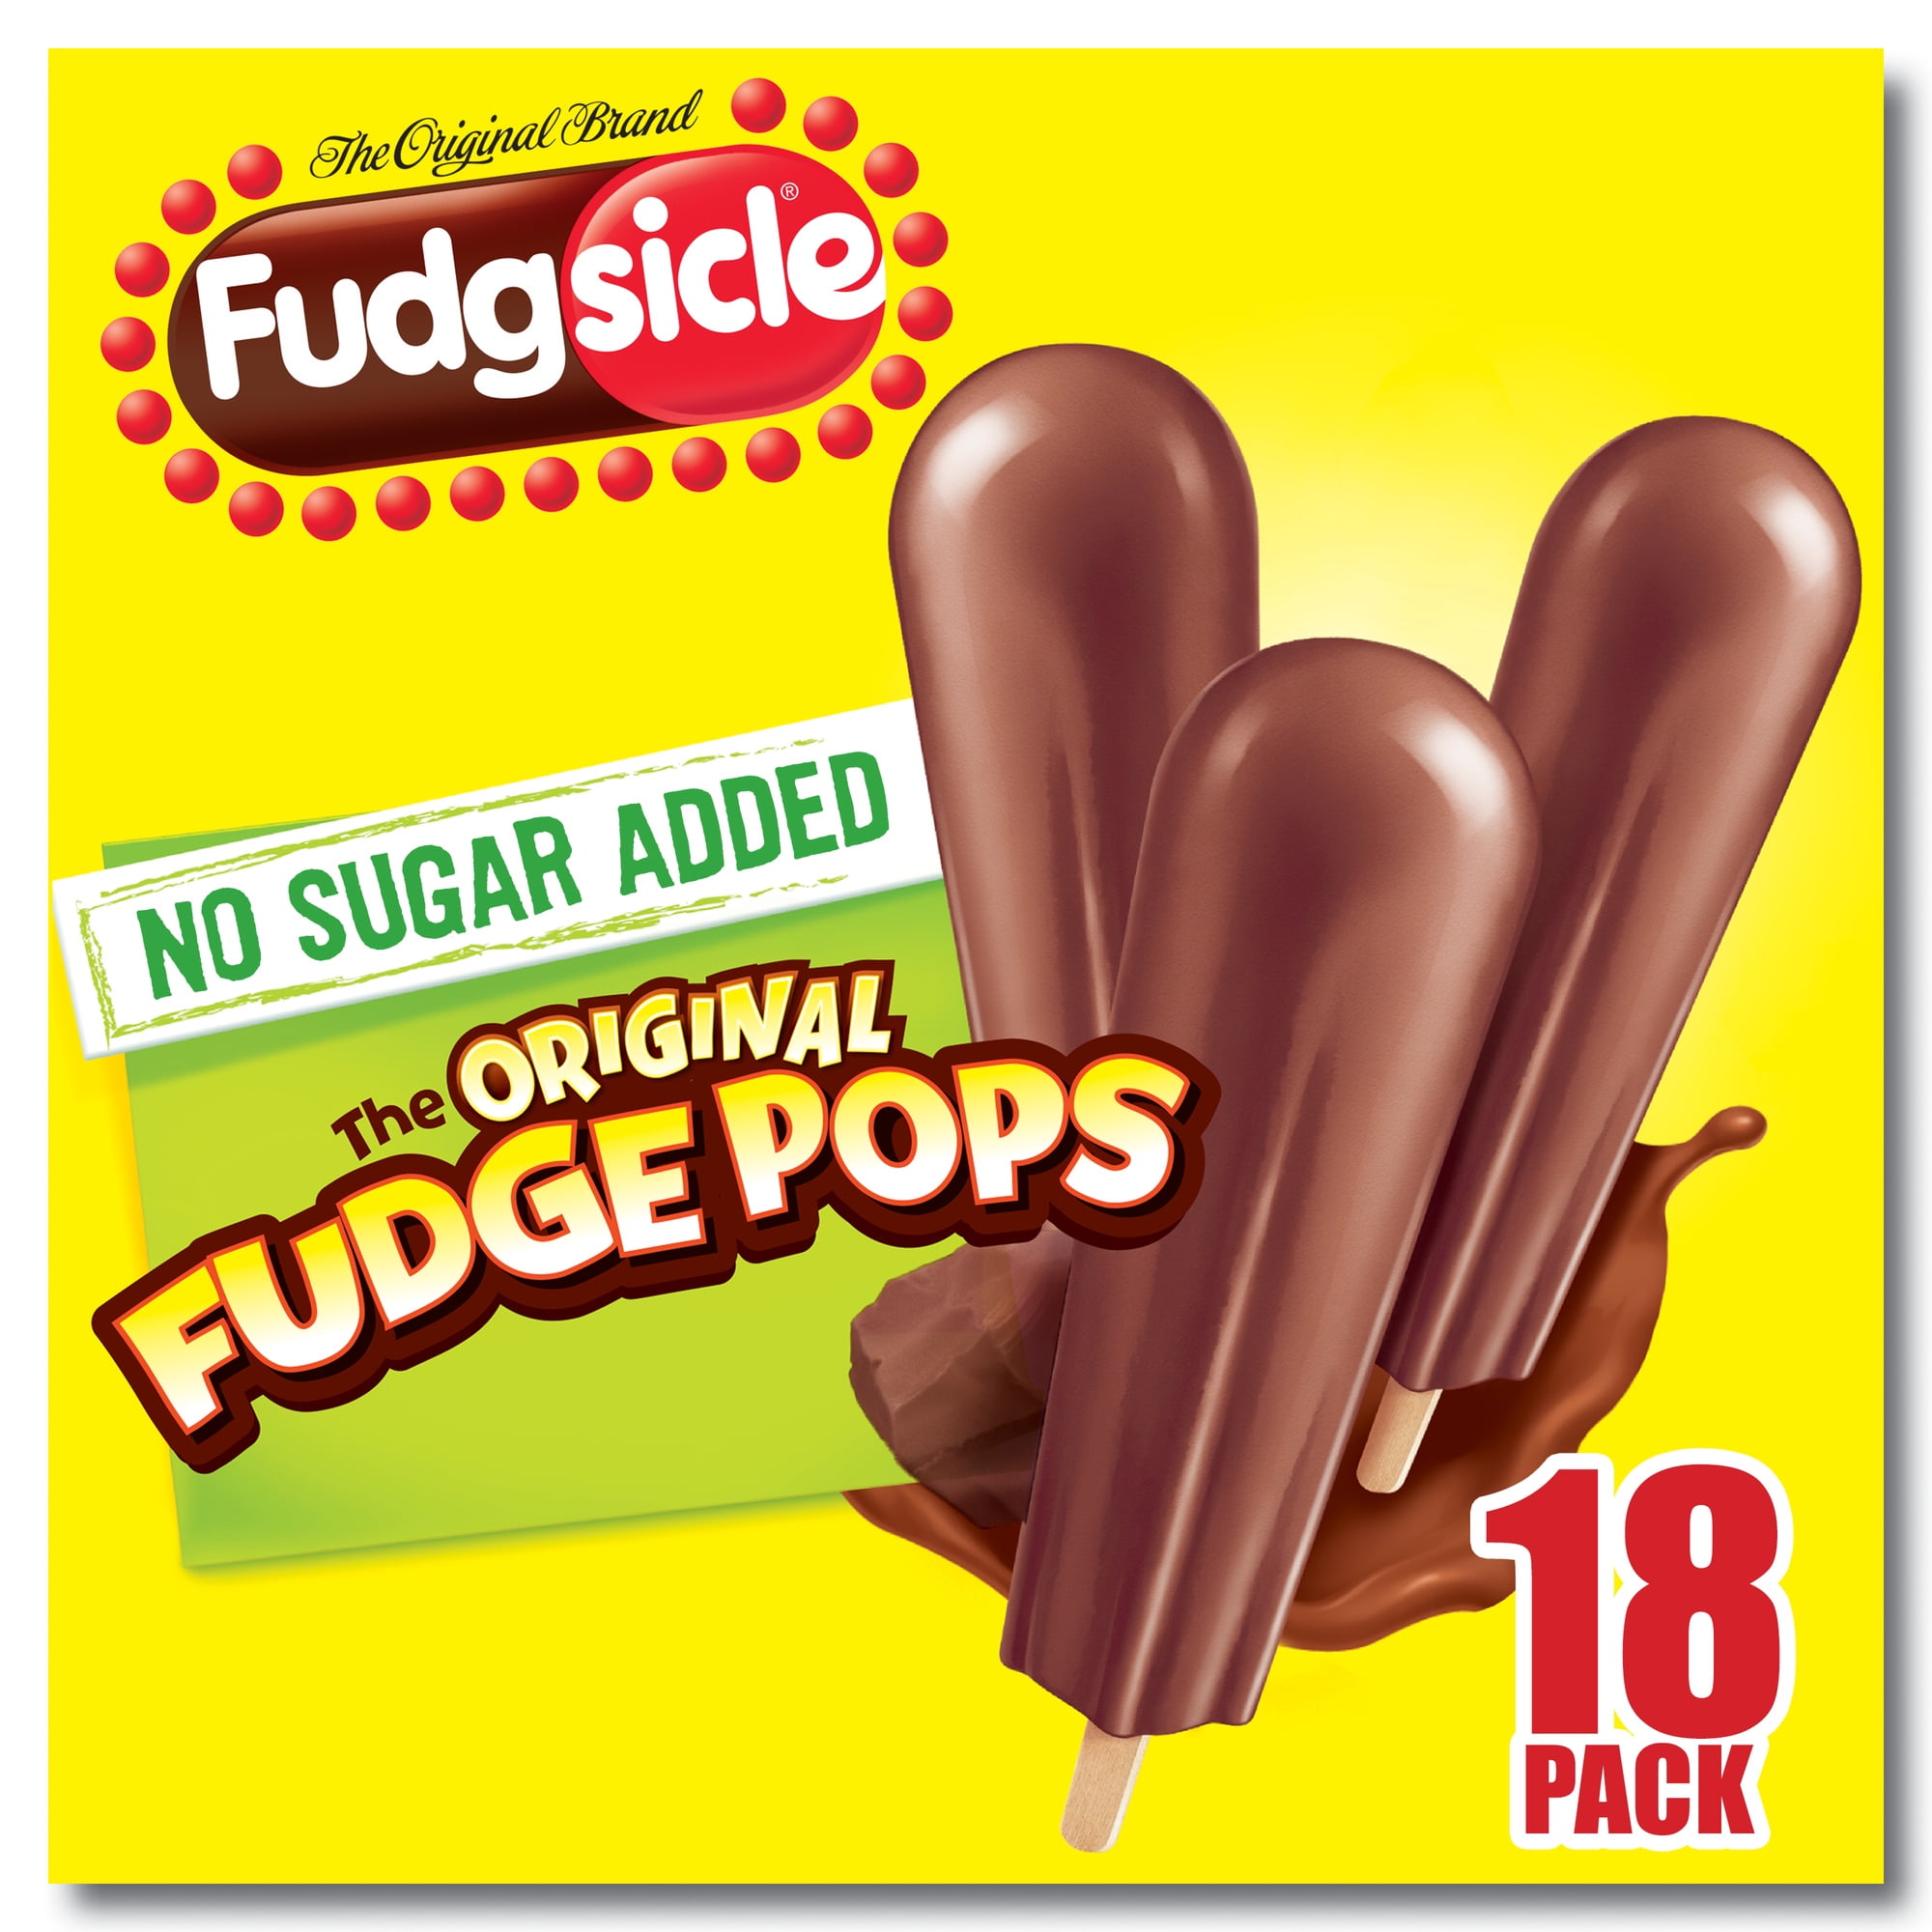 Popsicle Fudgsicle Original Fudge Pops No Sugar Added 29.7 oz, 18 Count